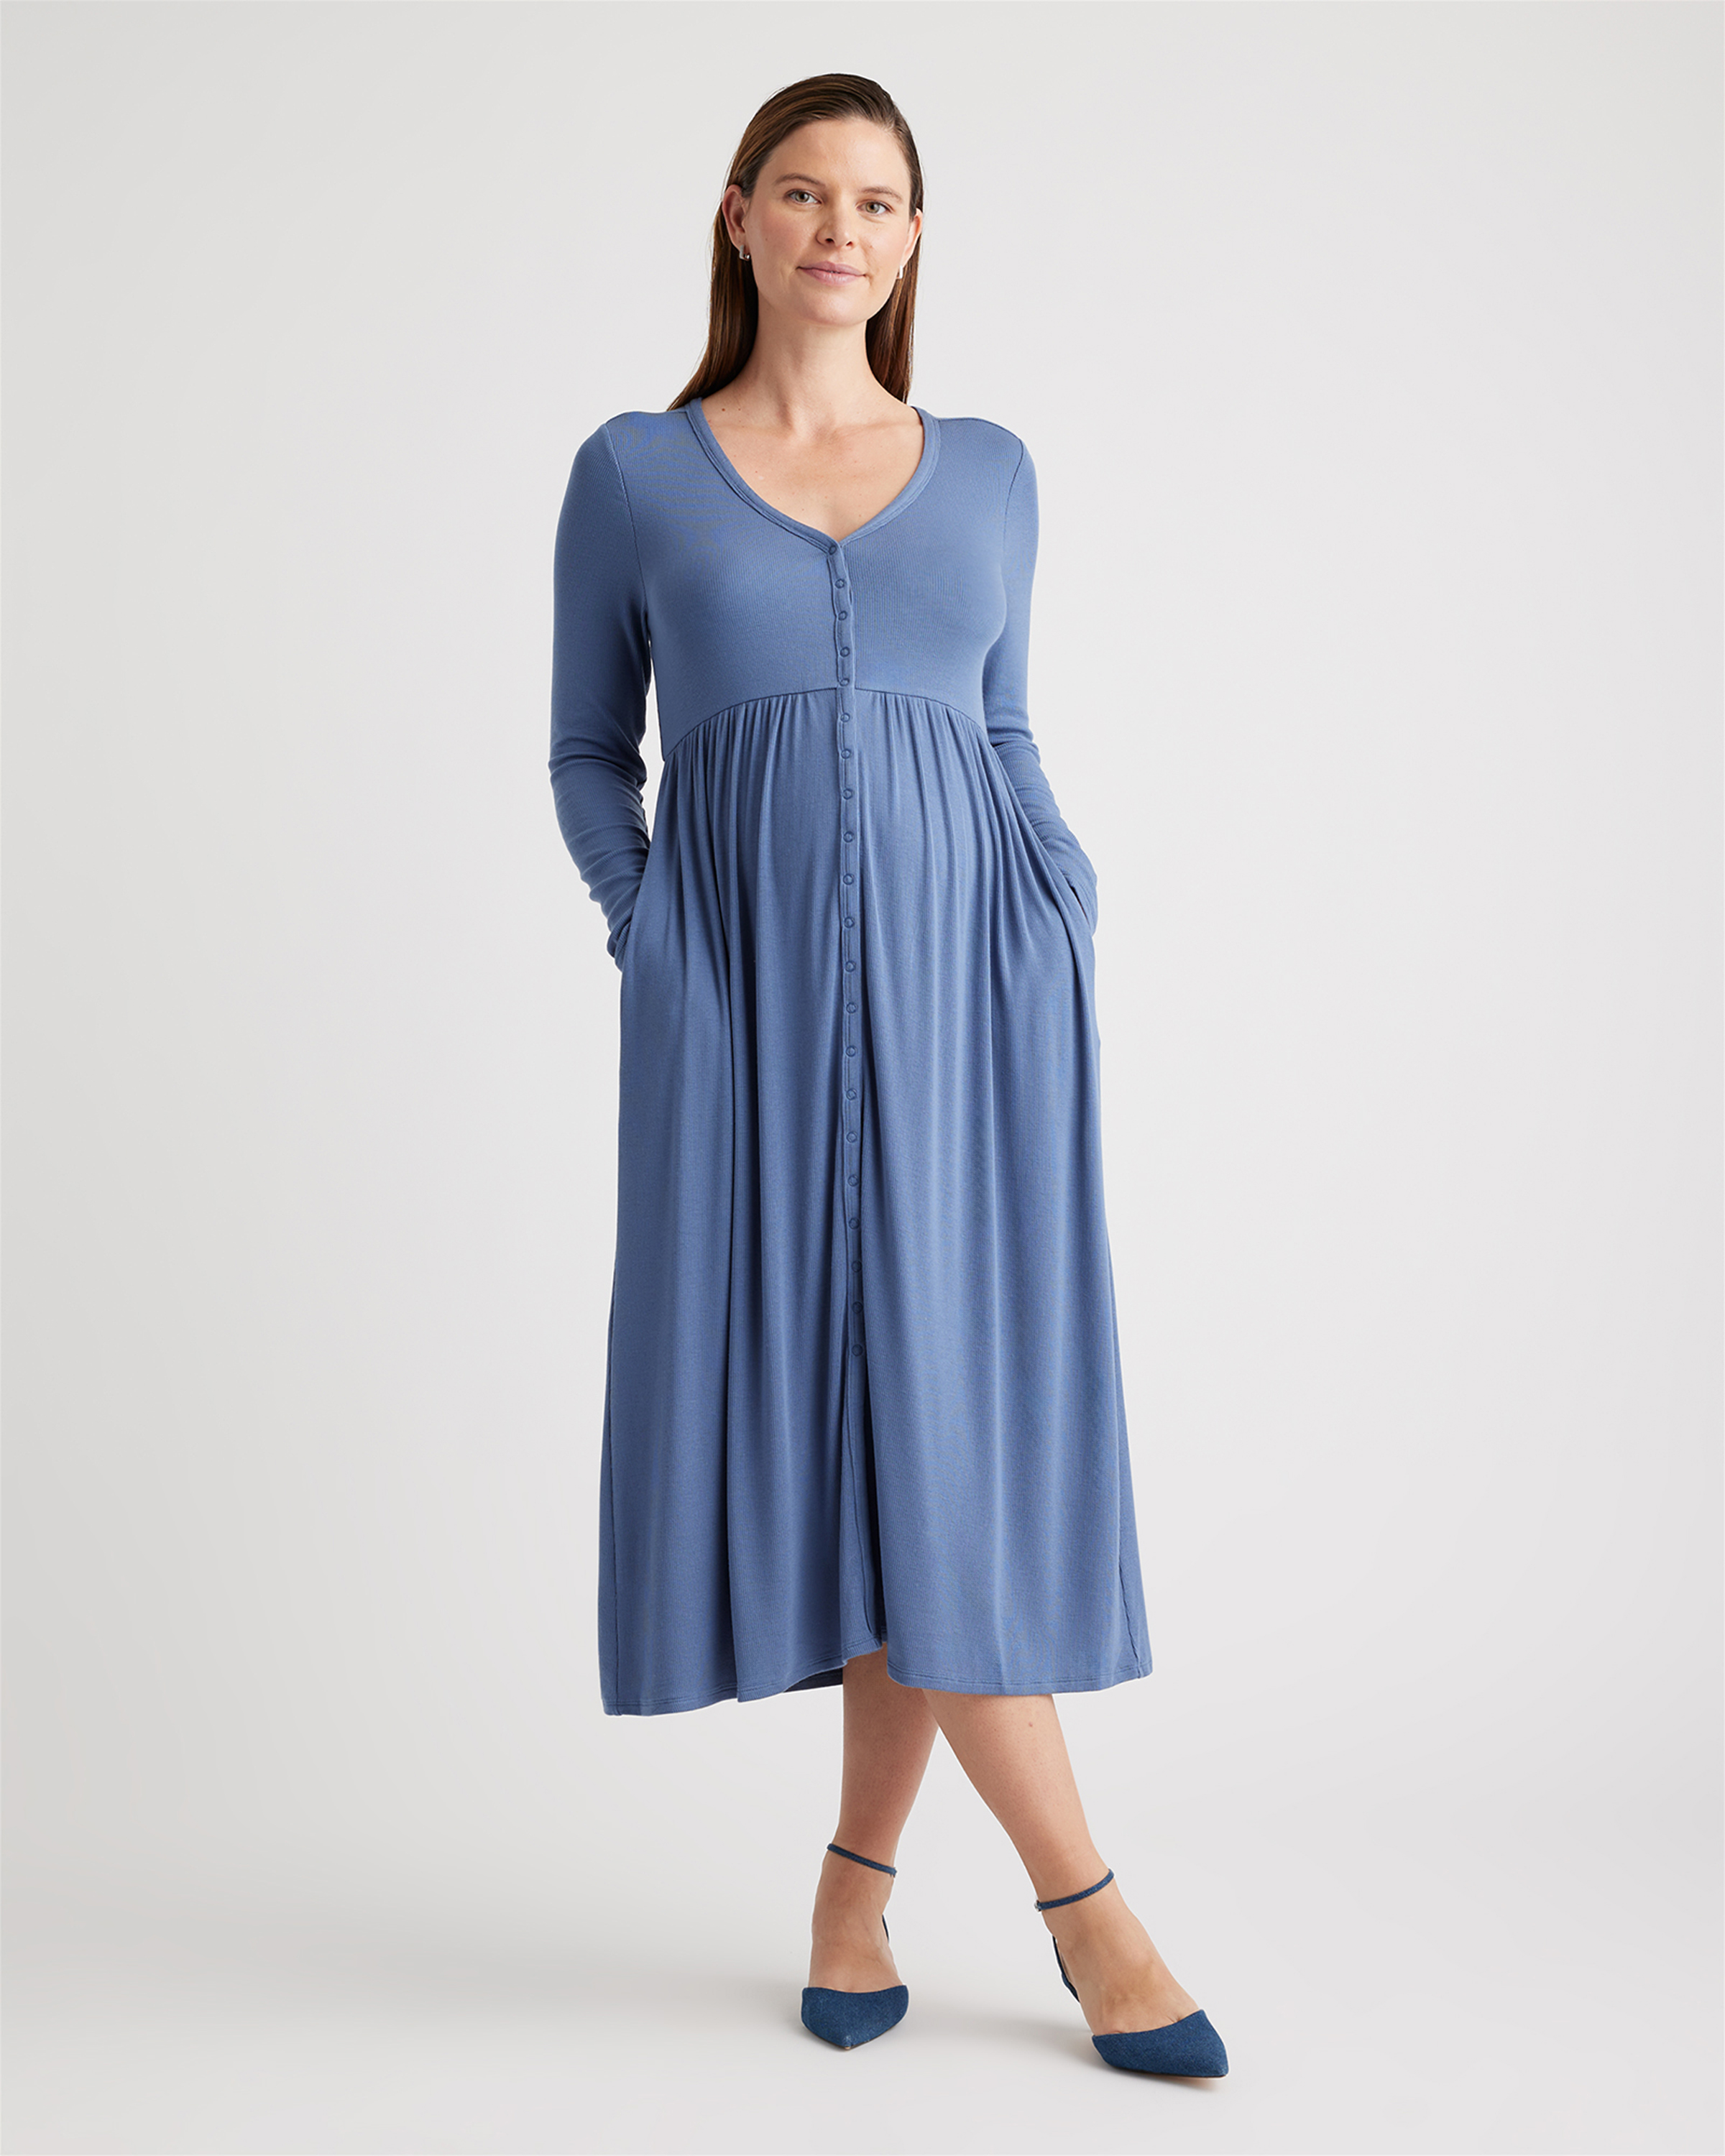 Nursing Slip Dress Dark Blue Knit Slip Dress, S-XXL